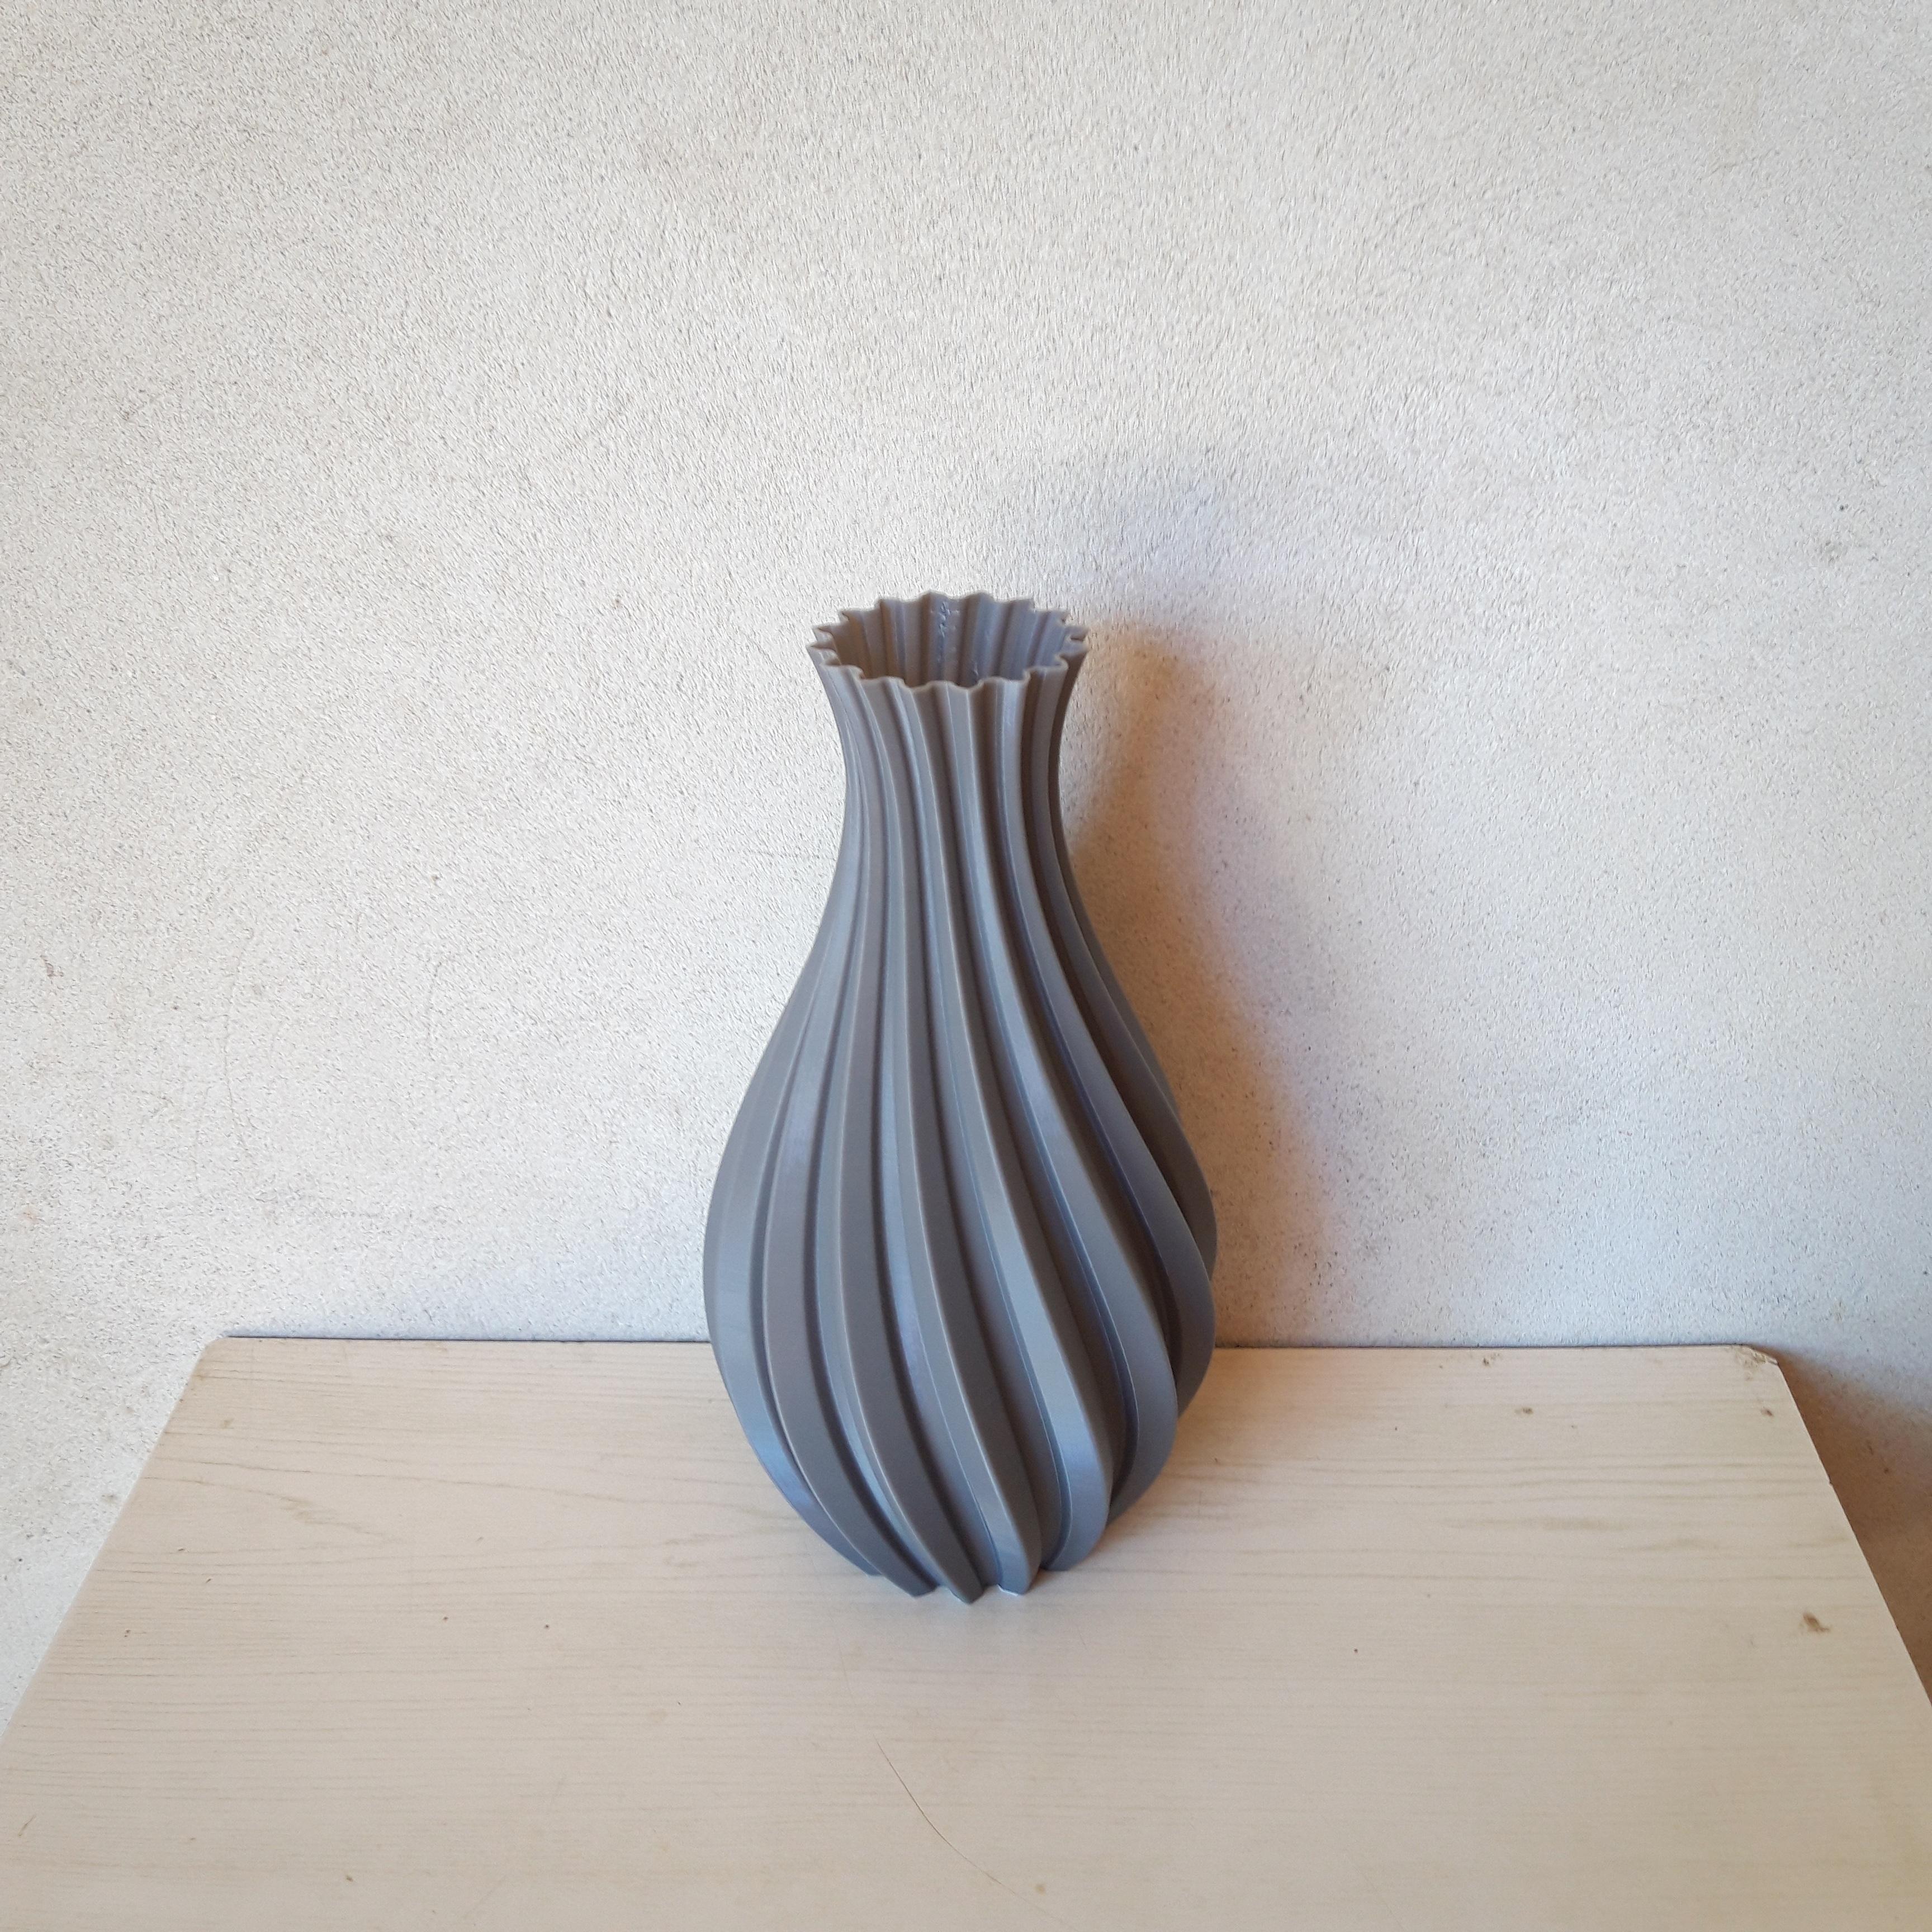 Stylish vase 3d model